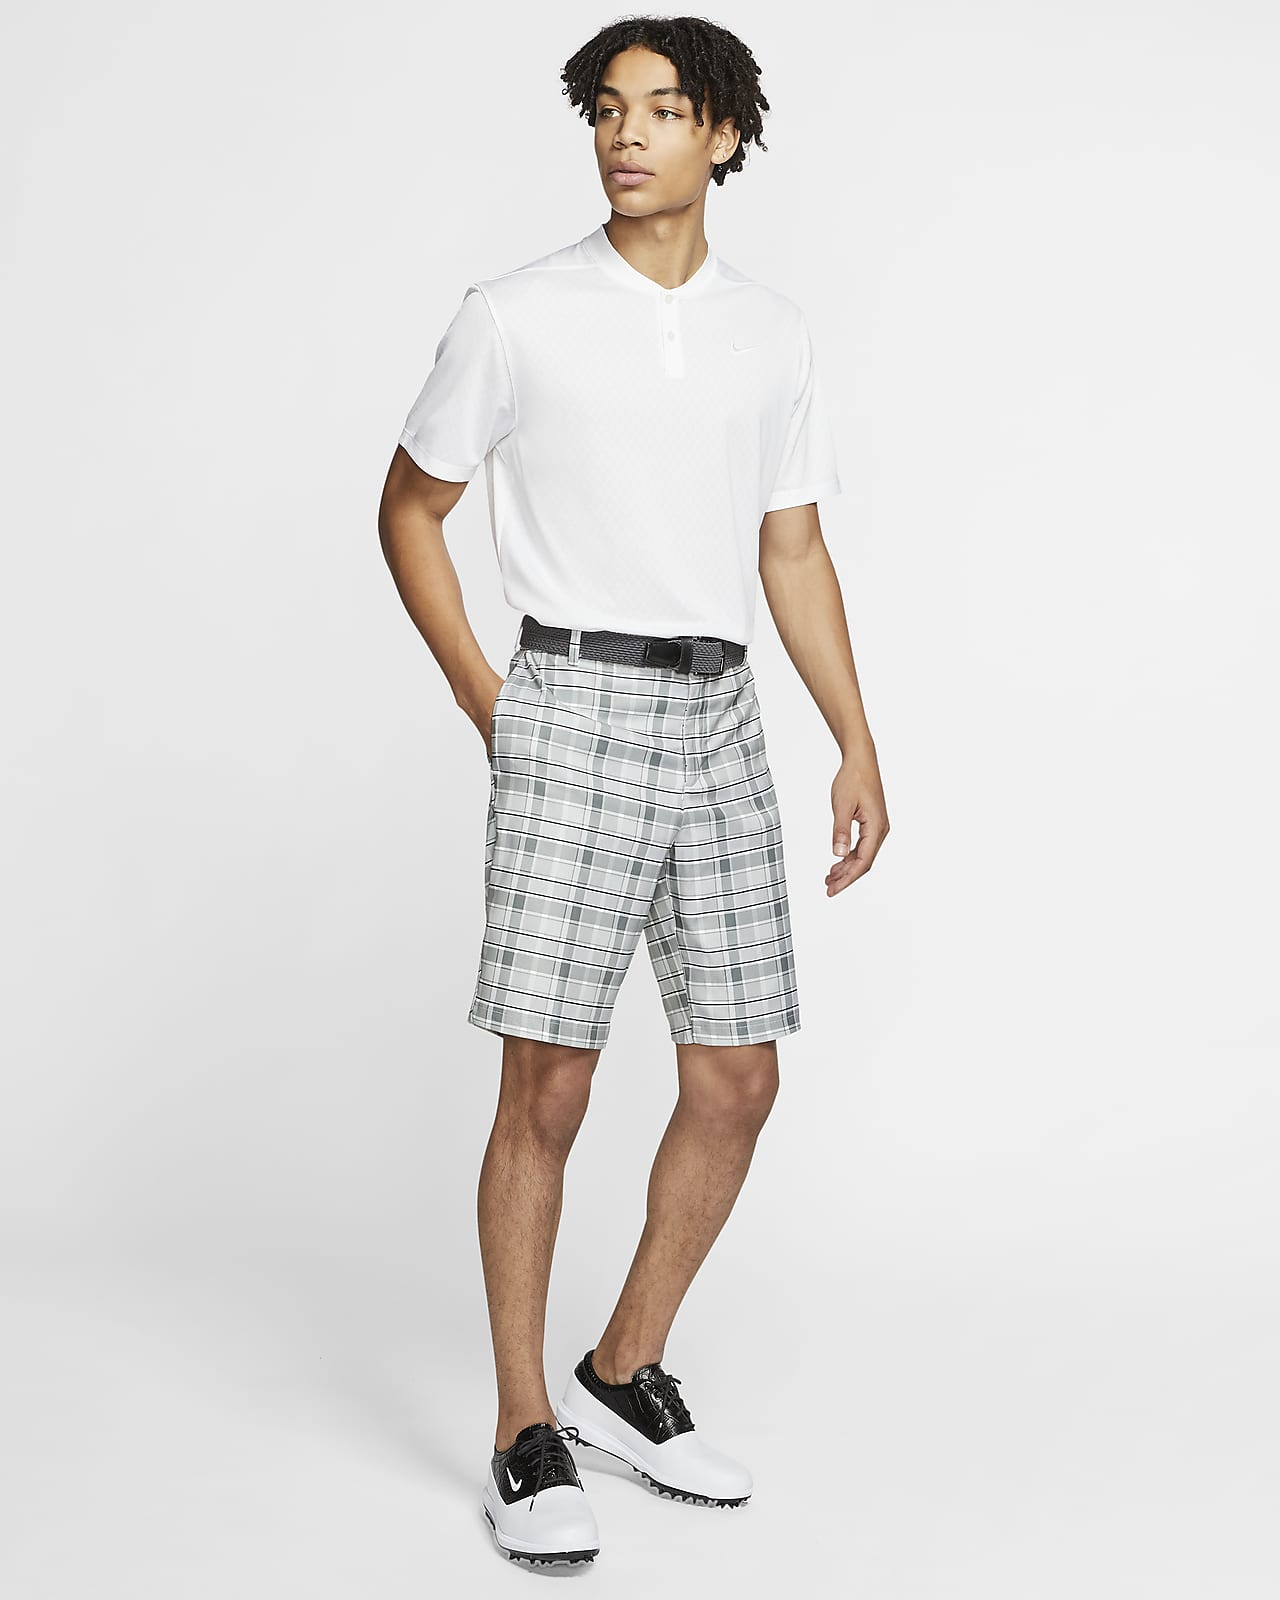 grey nike golf shorts